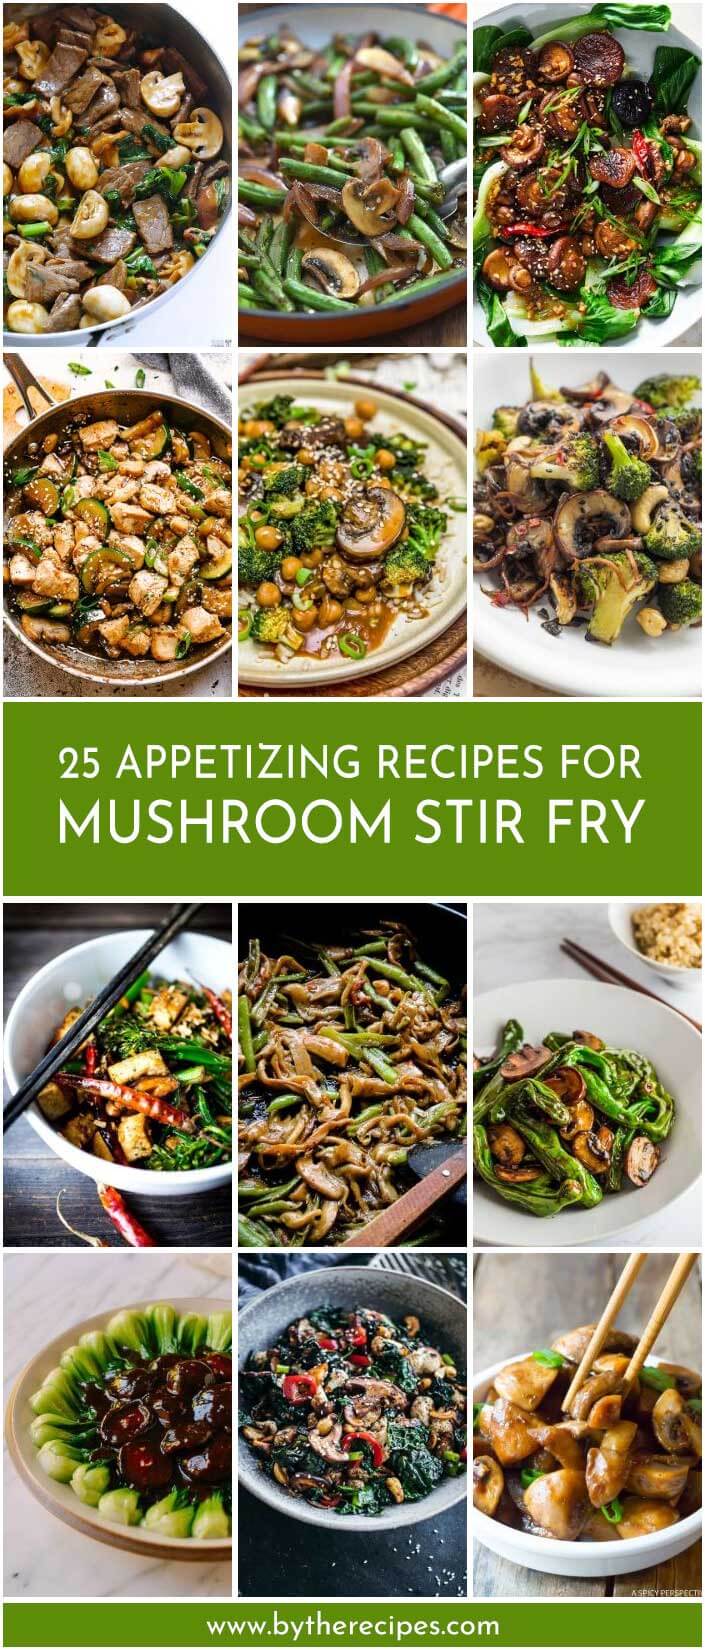 25 Appetizing Recipes For Mushroom Stir Fry